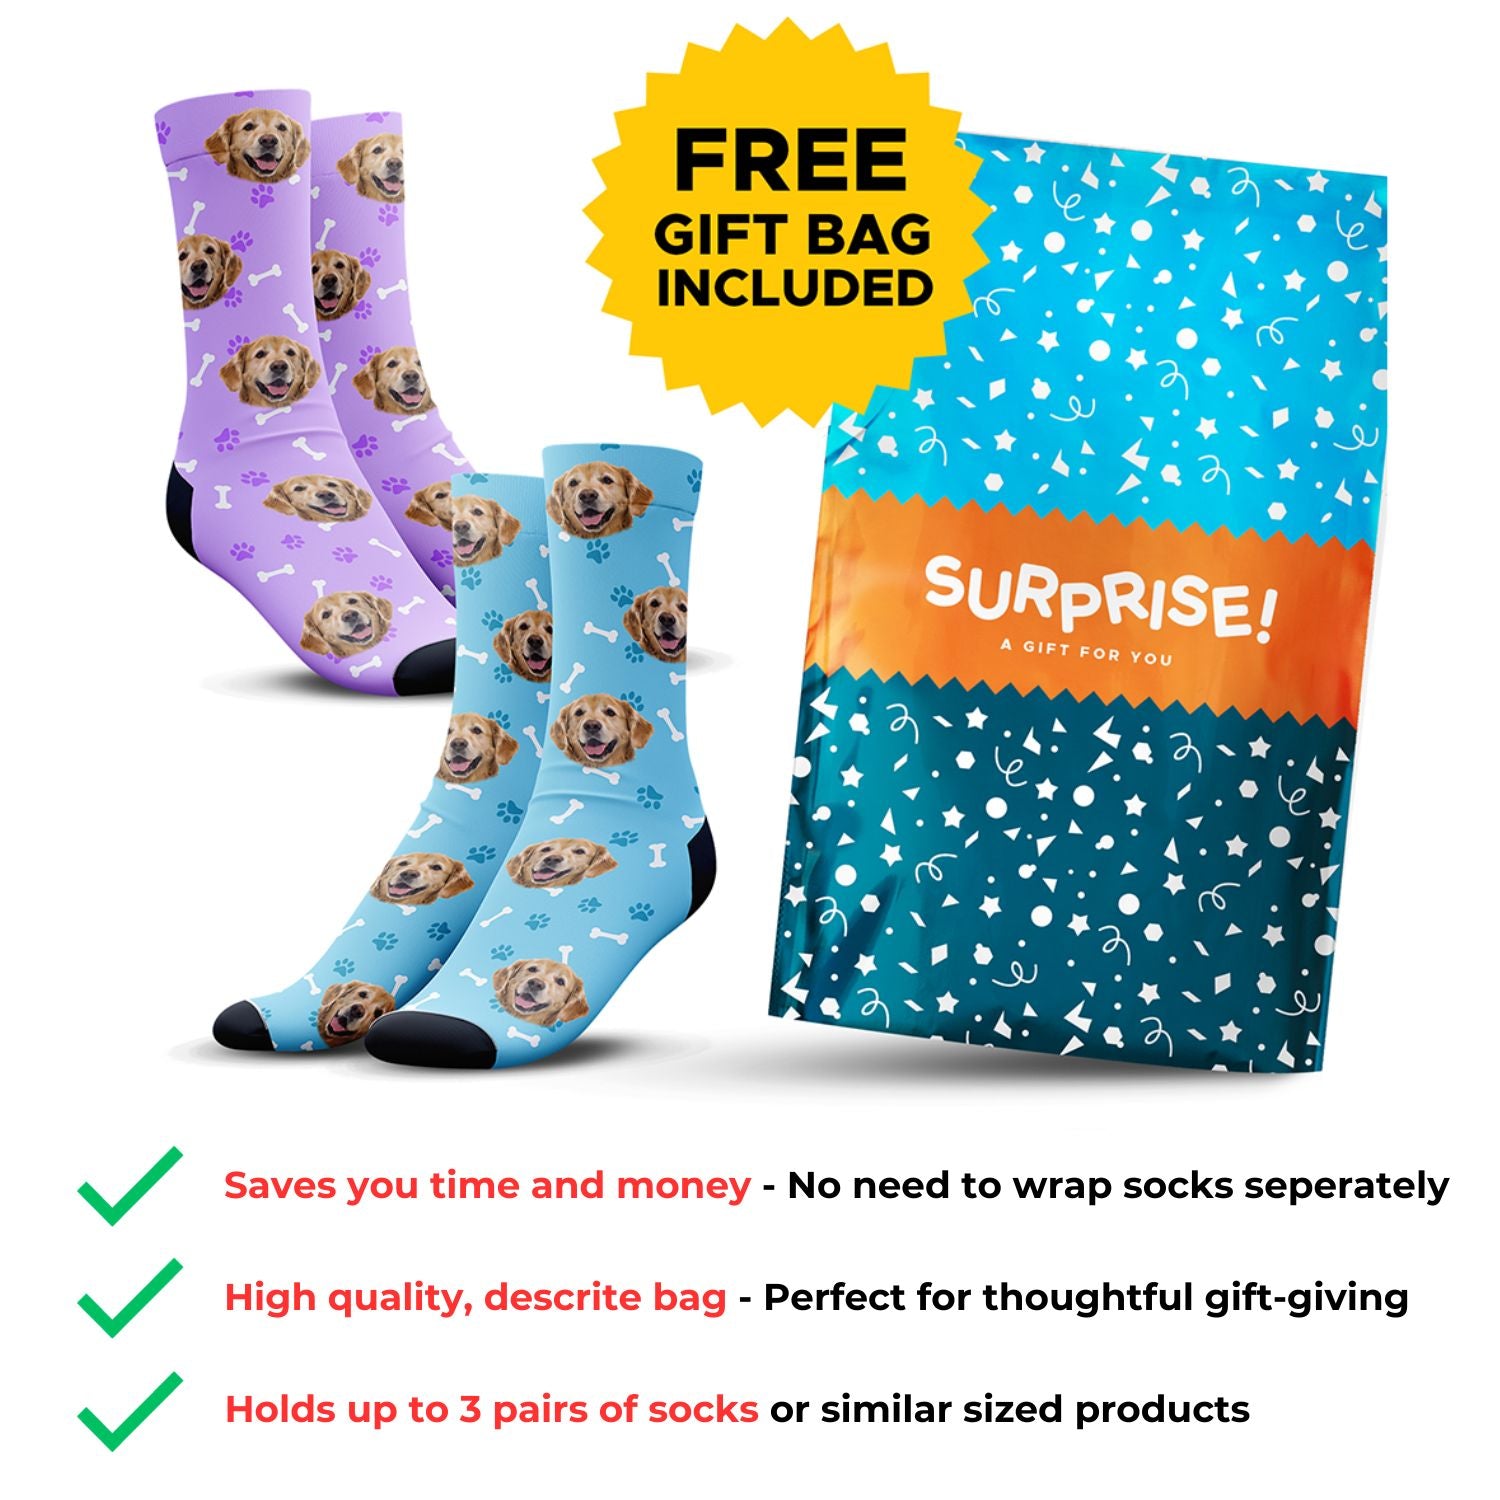 Custom Candy Cane Socks - 100% Free, Limit 1 Per Customer